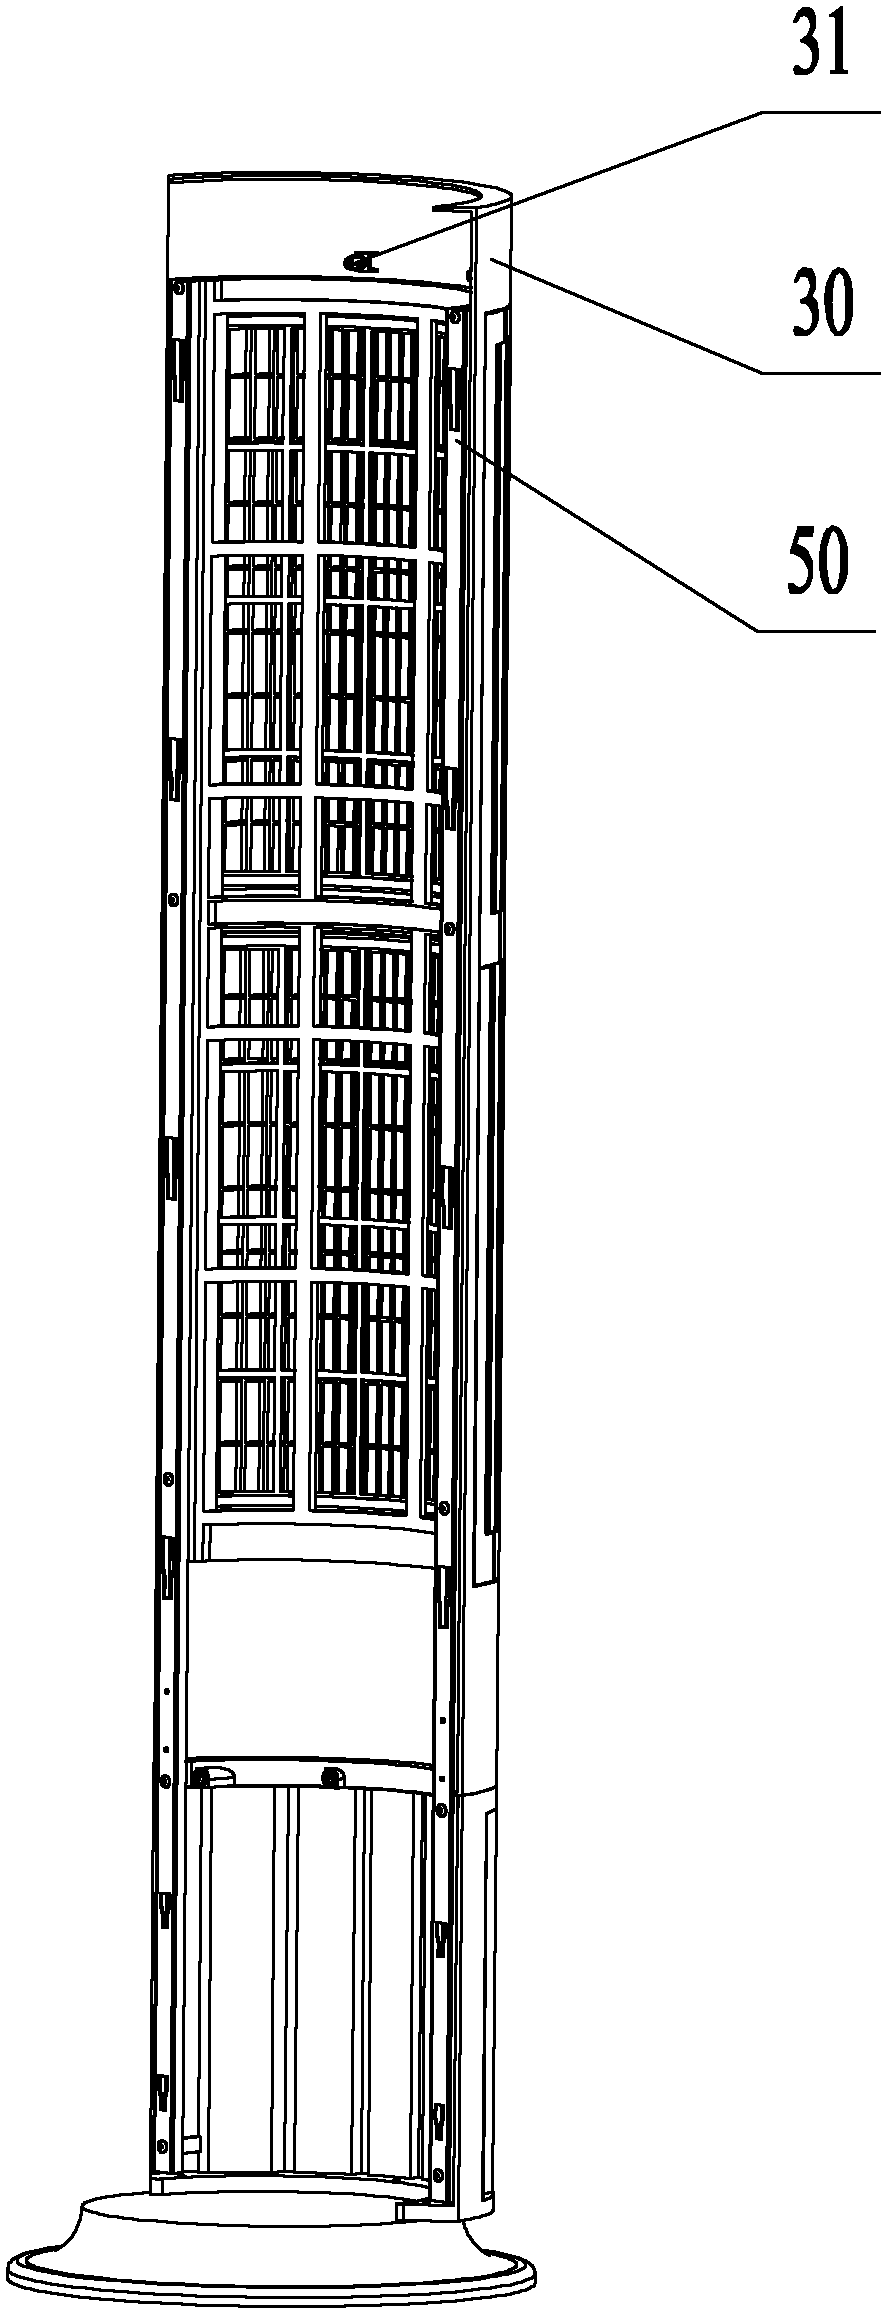 Vertical type air conditioner